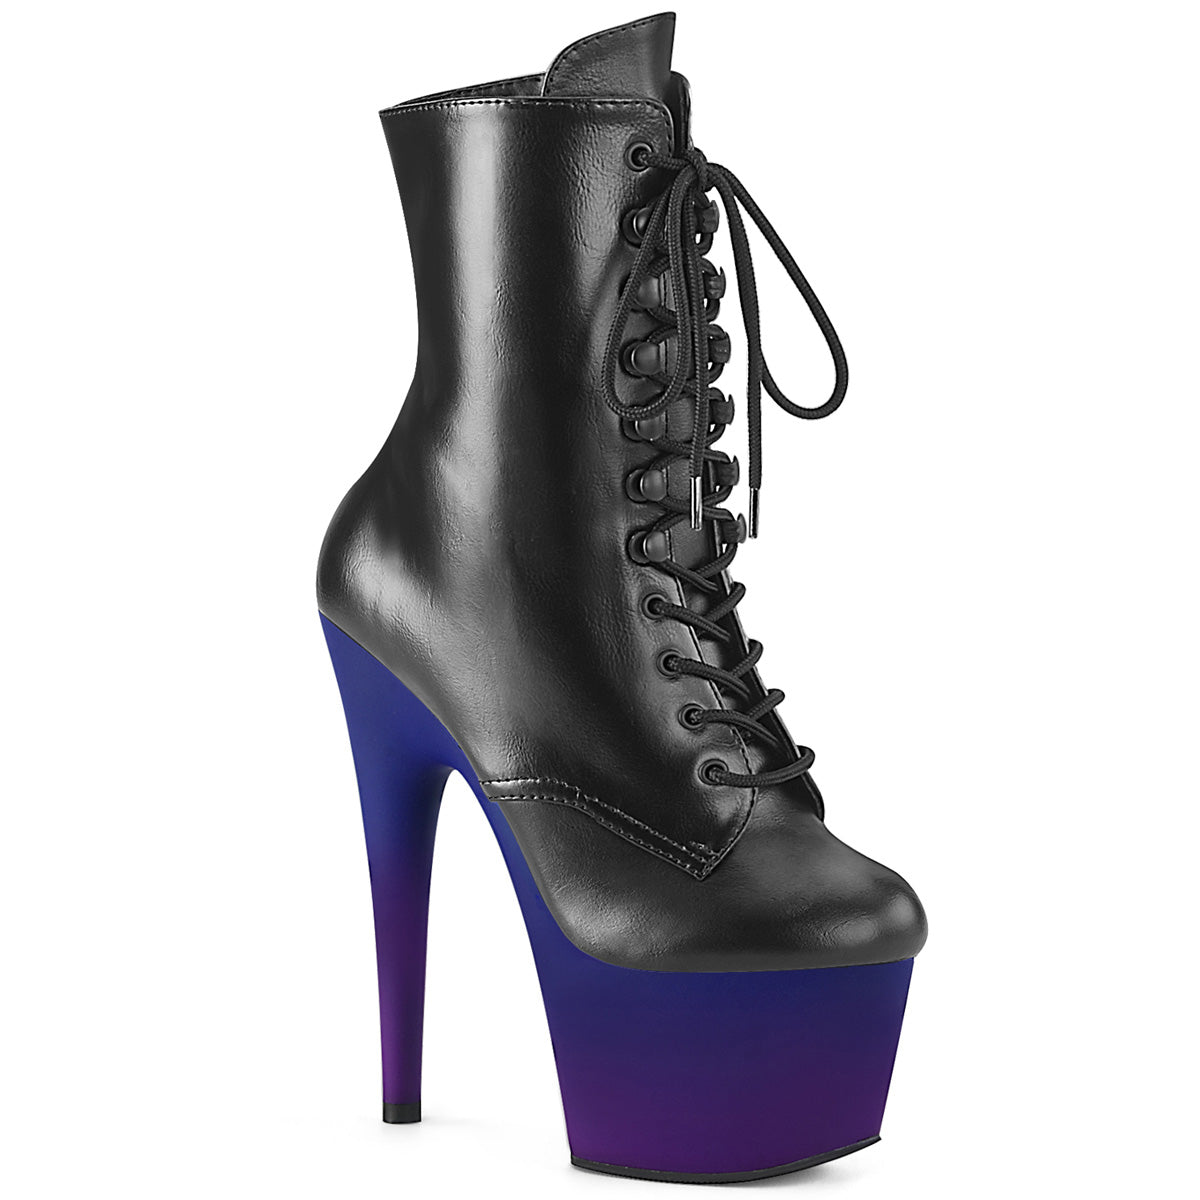 ADORE-1020BP Black & Purple Calf High Boots